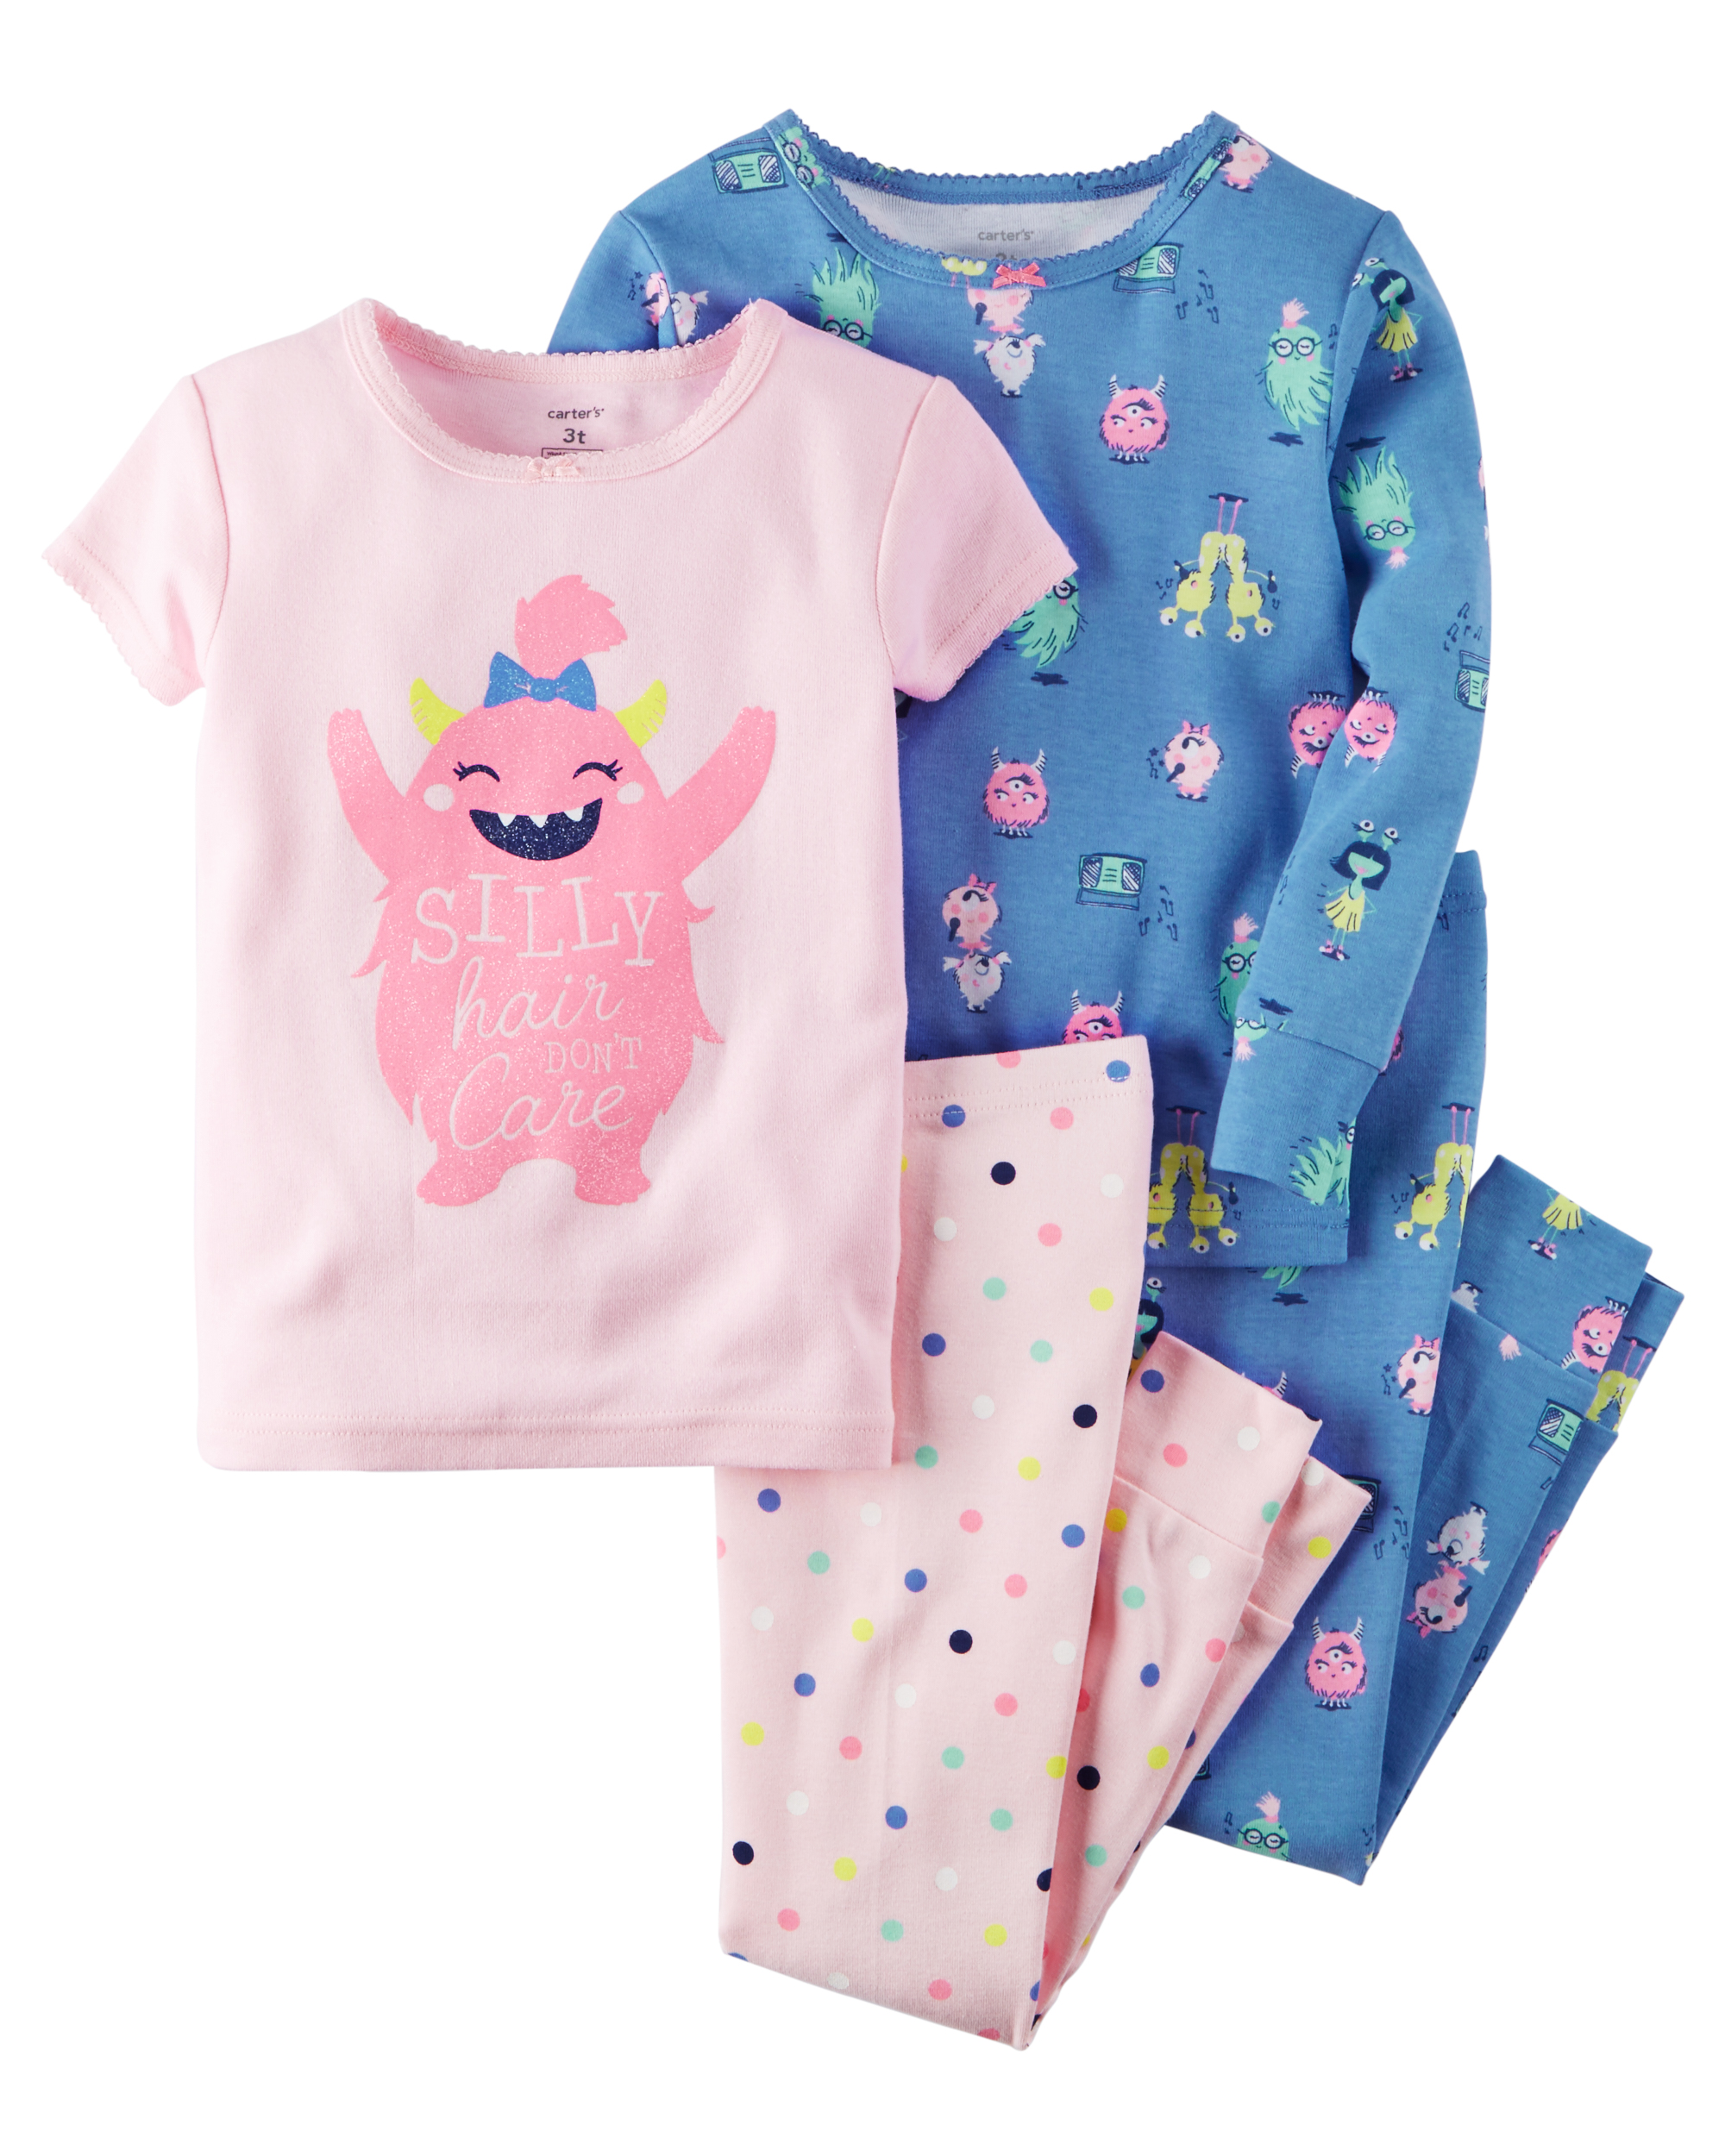 Carter's Infant & Toddler Girls' 4-Pc. Pajama Set - Silly Hair